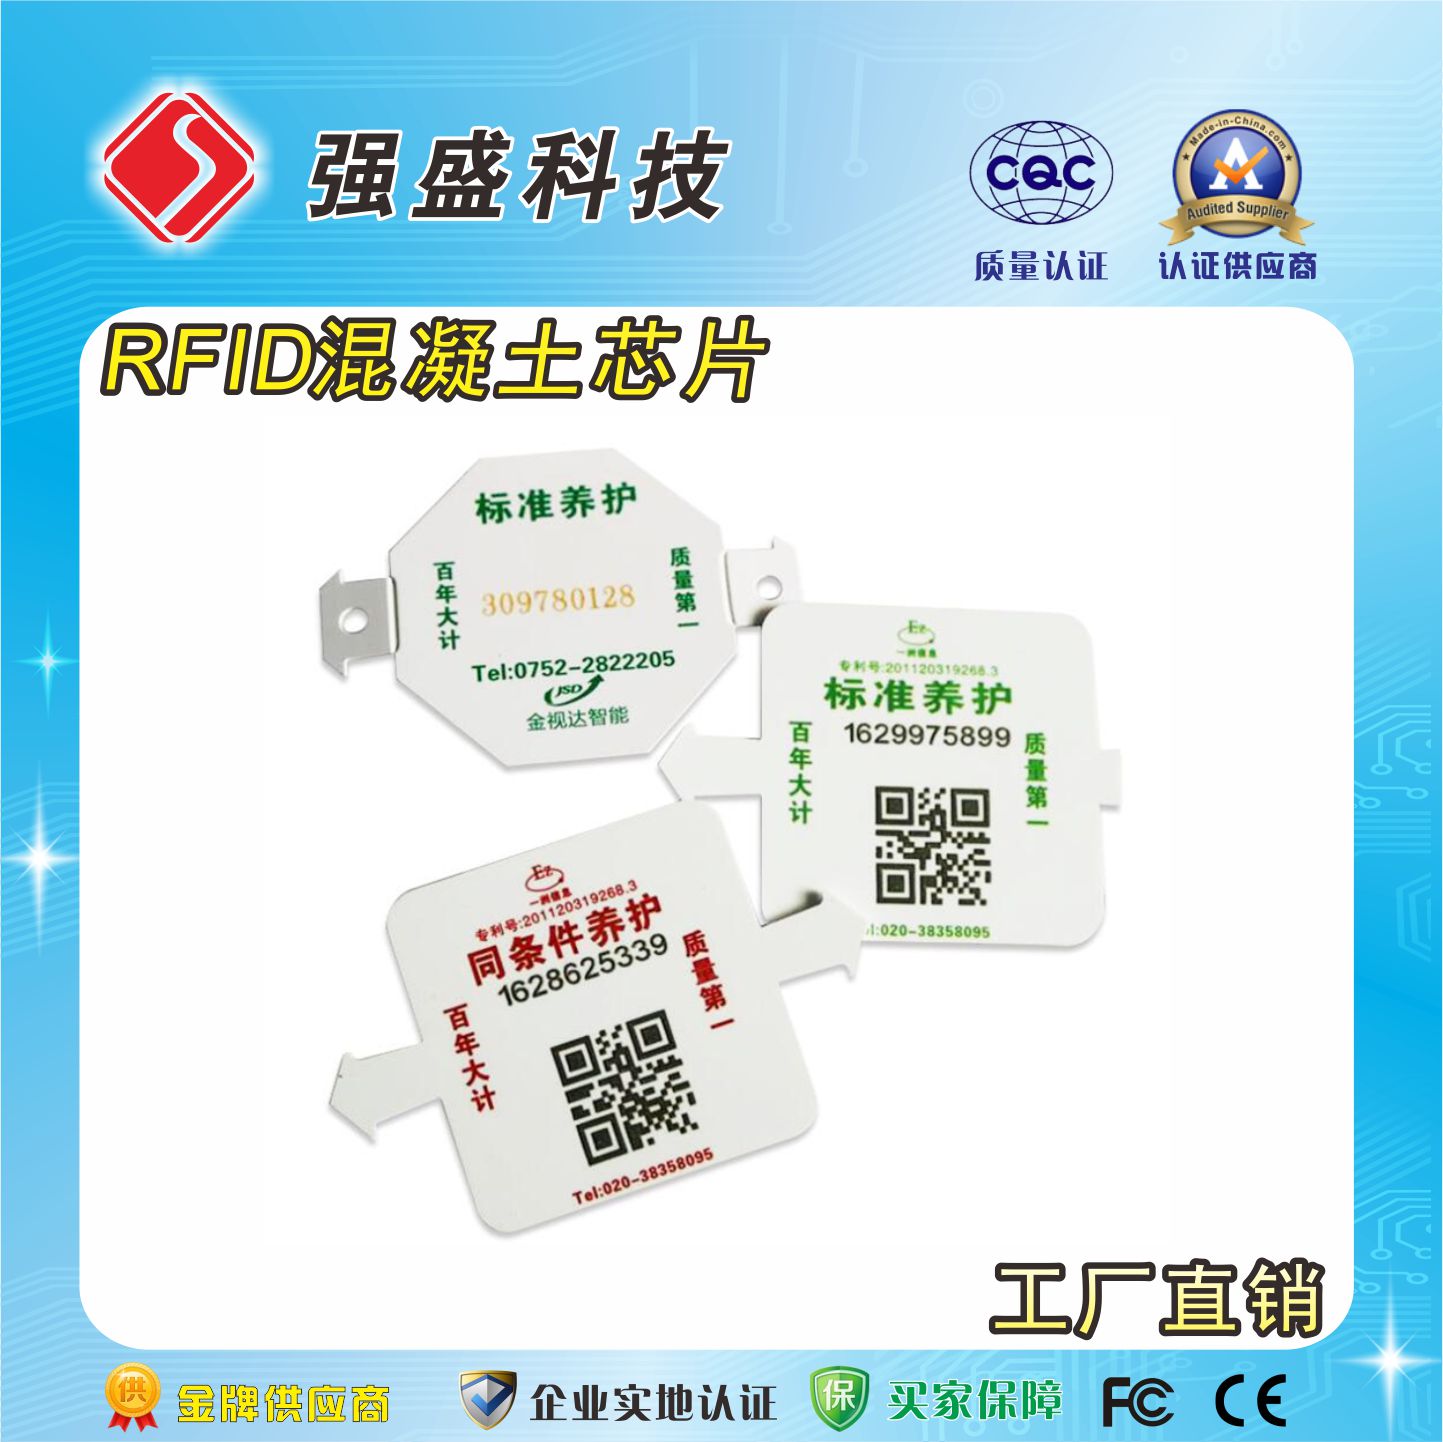 RFID混凝土电子标签价格 广州混凝土试块植入芯片供应商 水泥植入电子标签厂家1